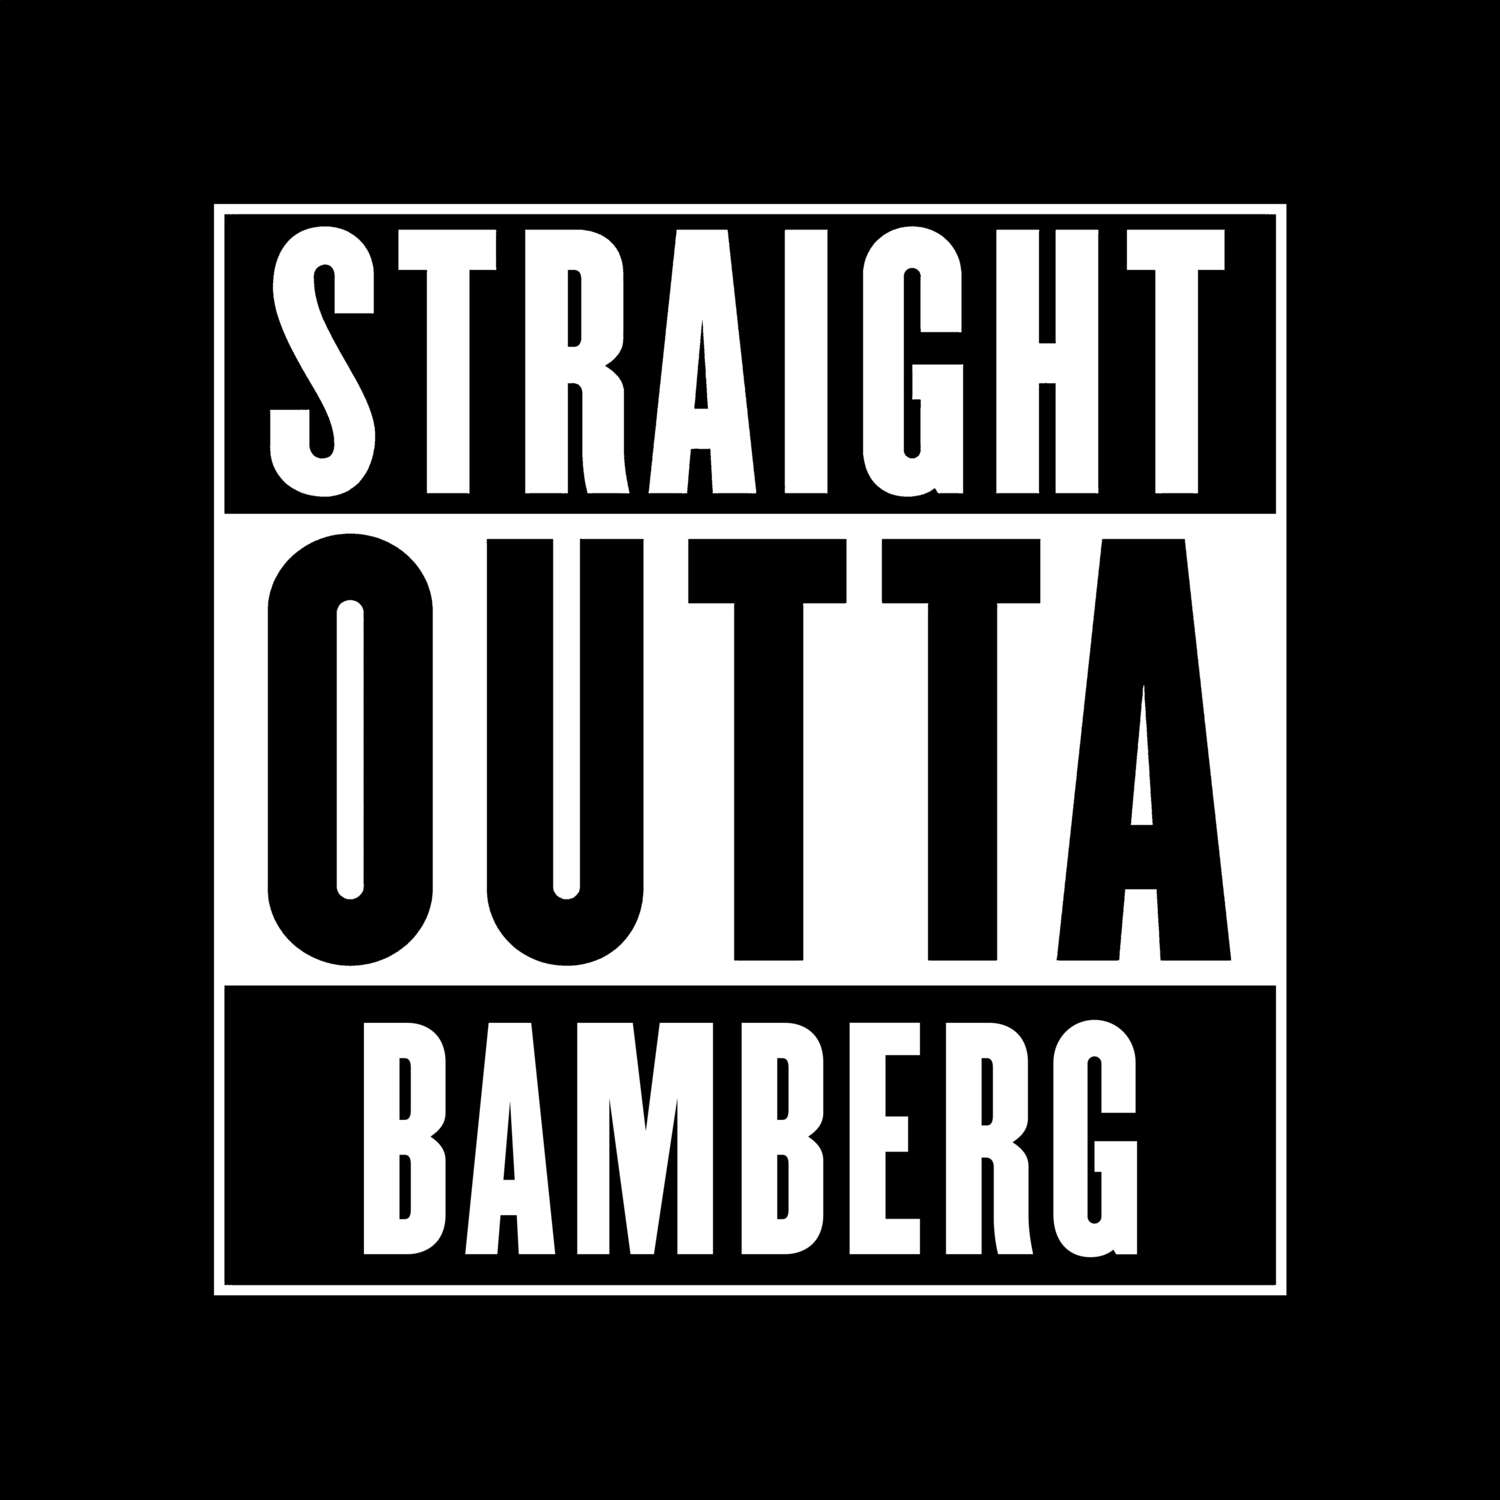 Bamberg T-Shirt »Straight Outta«